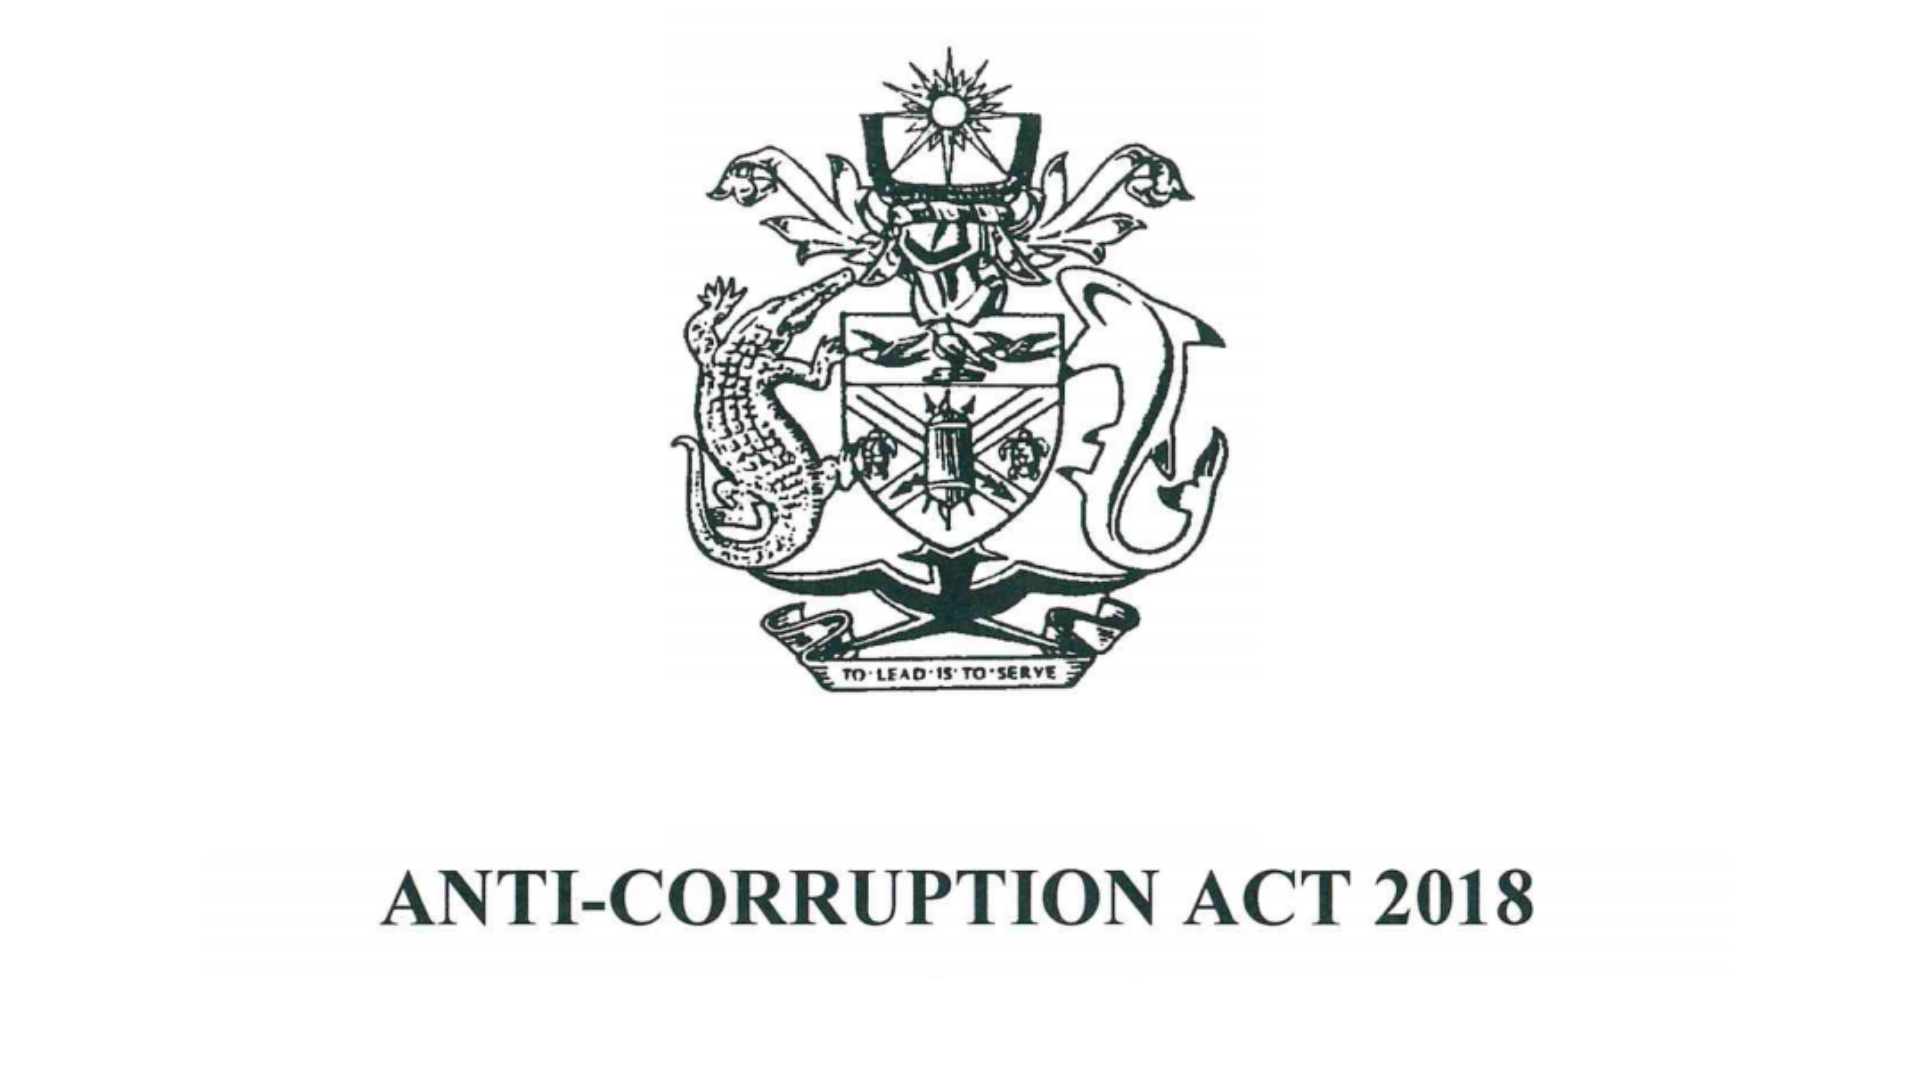 Anti-Corruption Act 2018